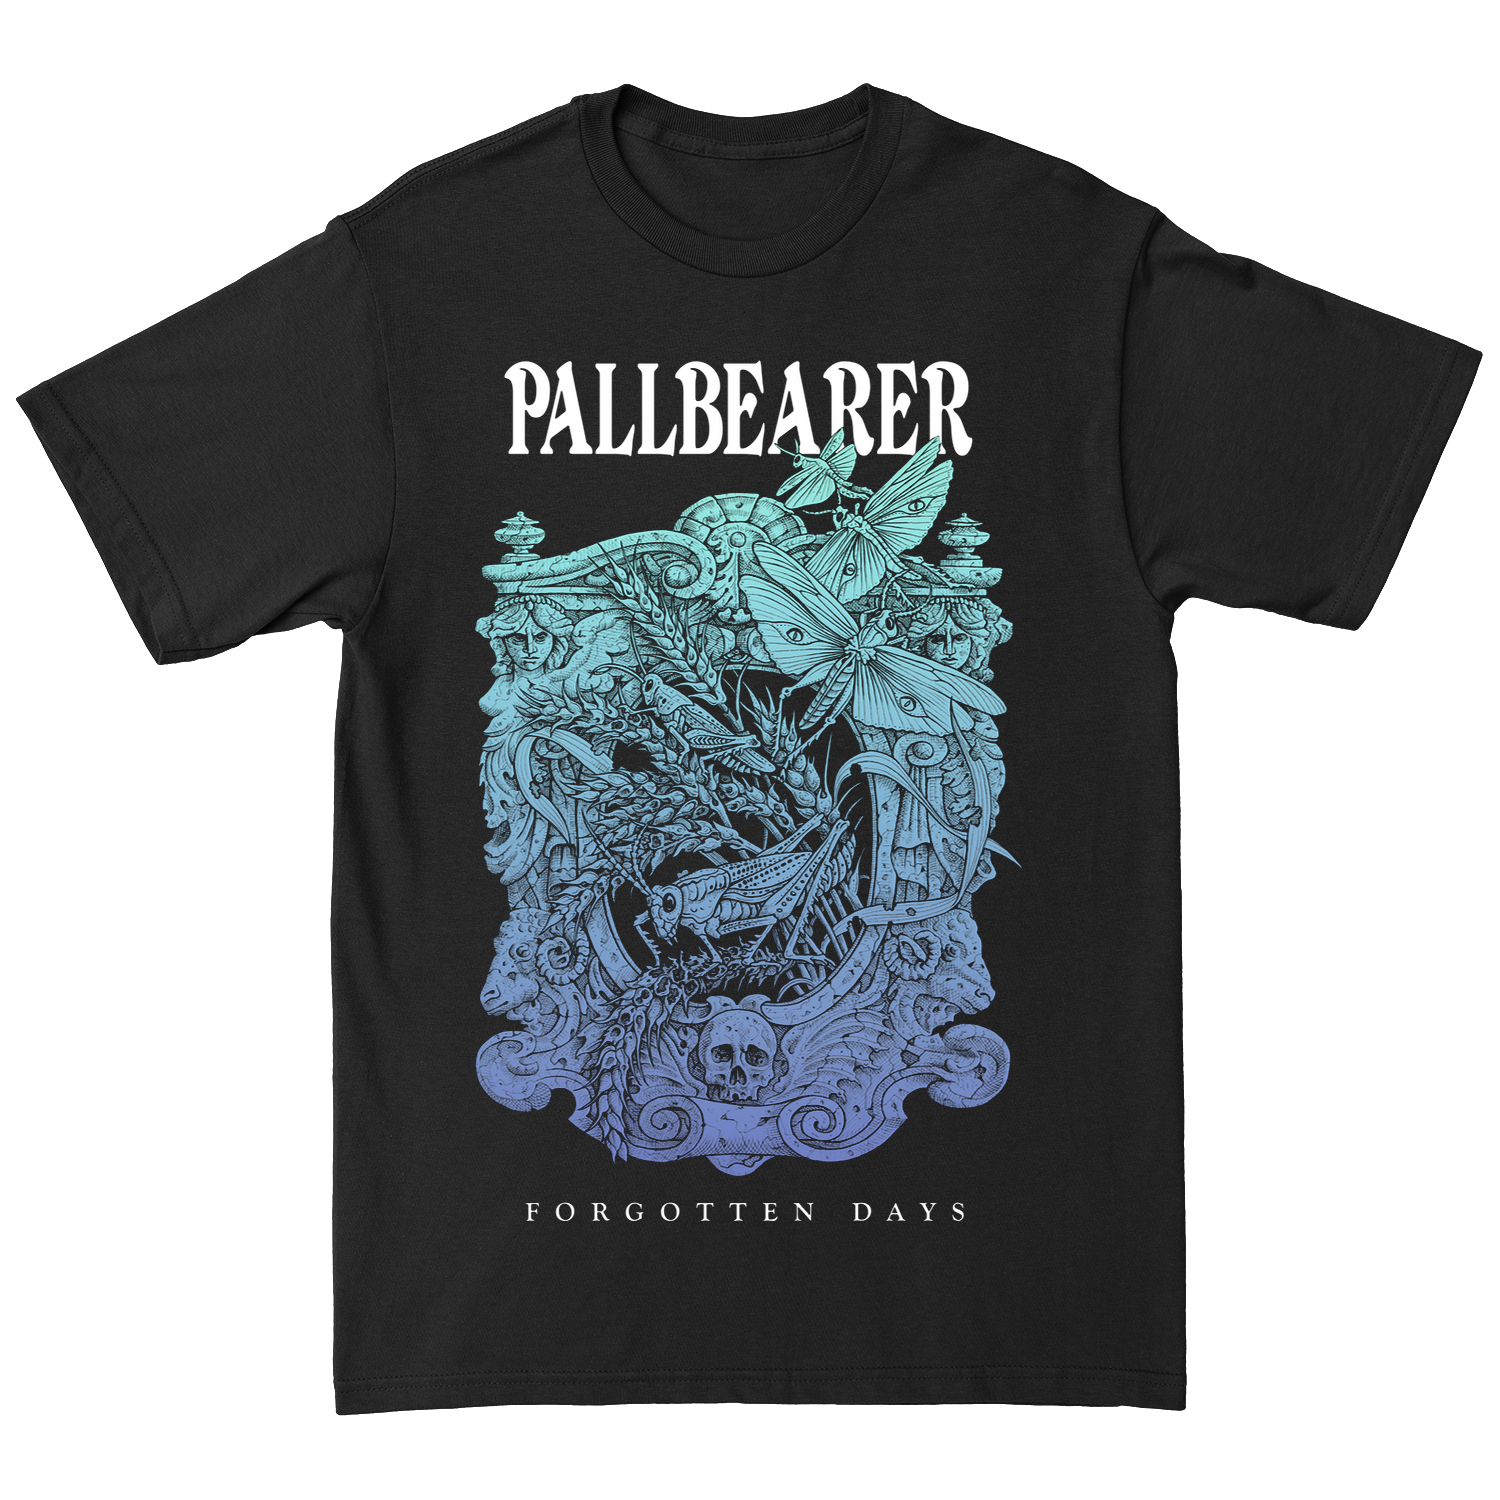 PALLBEARER "Famine" Black T-Shirt (Final Run)